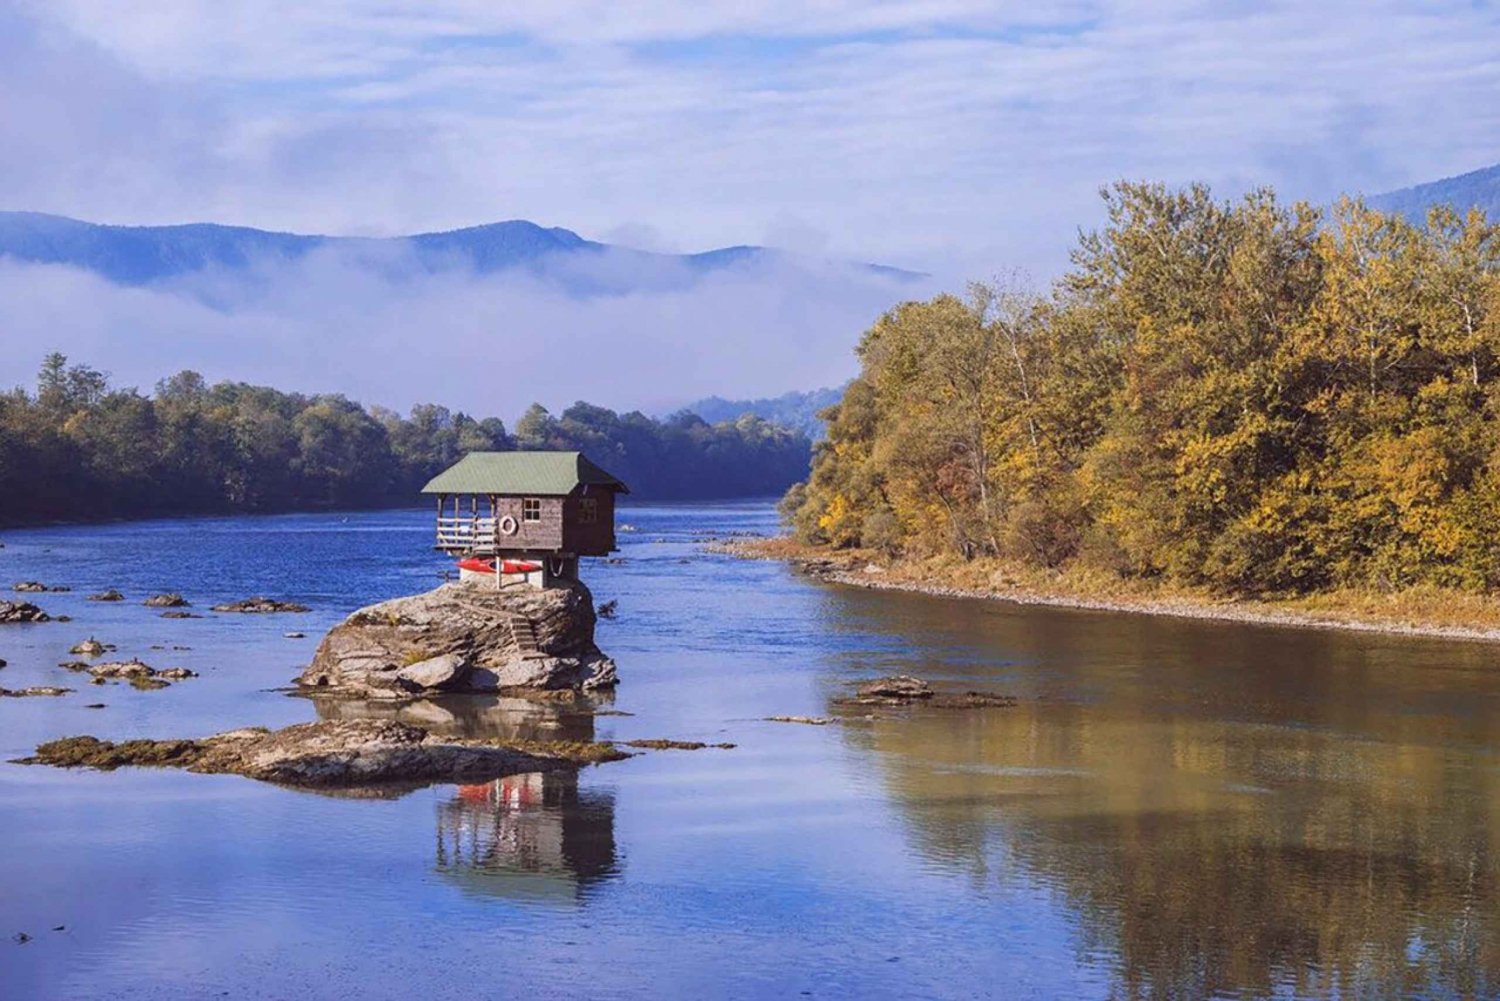 Serbia: Drina River House/Tara National Park Full Day Tour